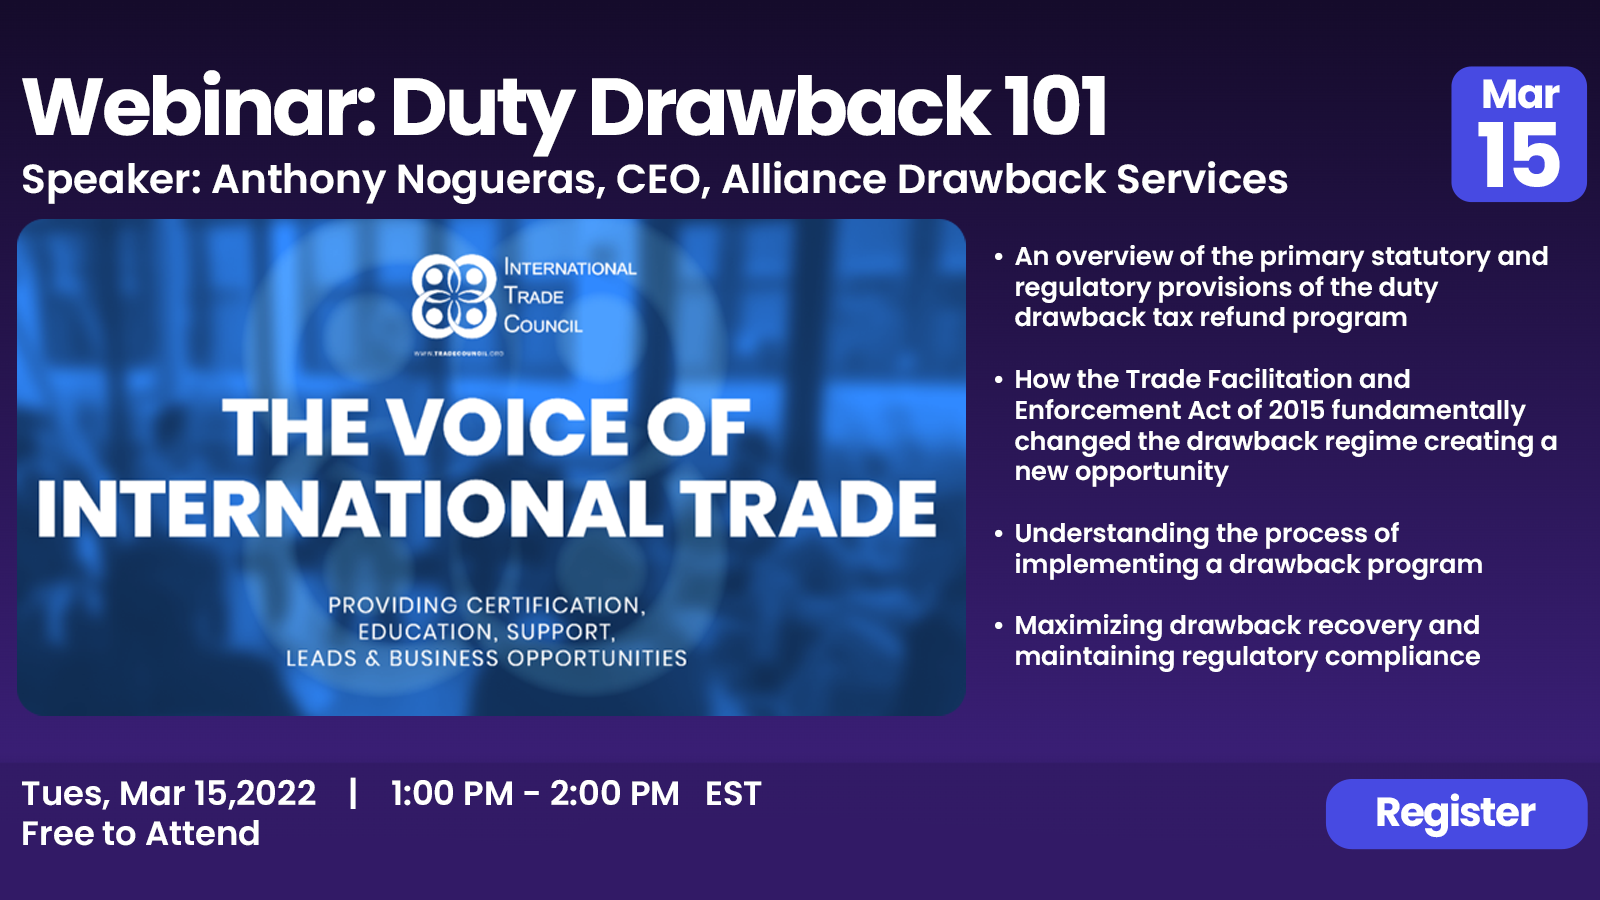 International Trade Council Duty Drawback Webinar